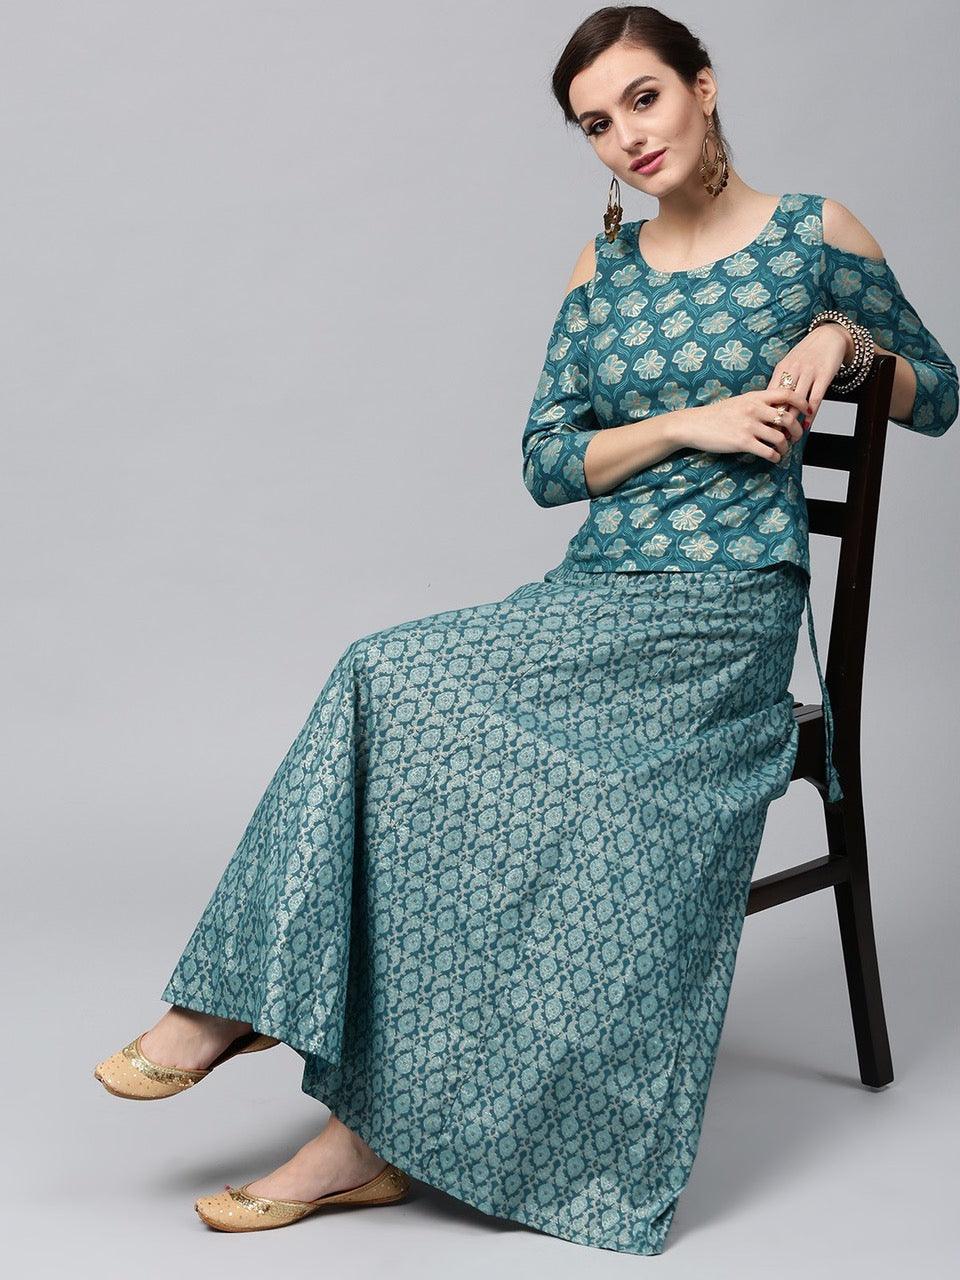 Torquoise Cotton Lehenga Suit | Kurti designs, Cotton lehenga, Celebrity  gowns